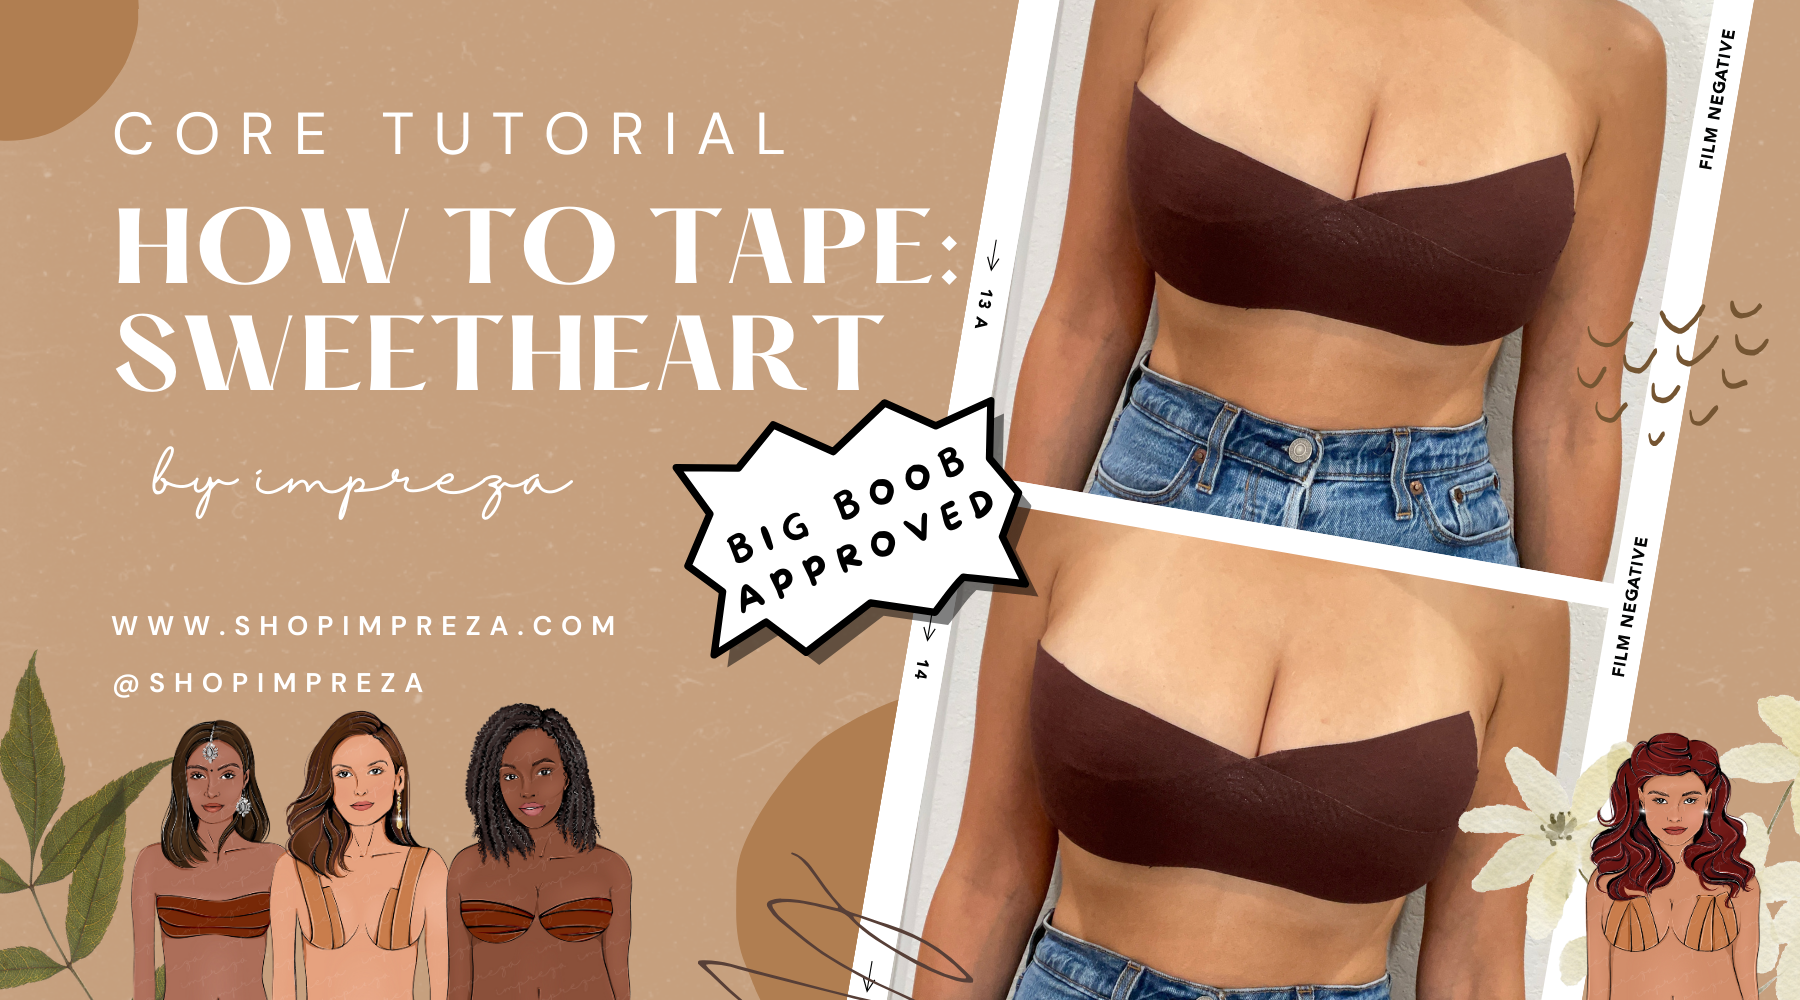 impreza breast & body tape tutorial sweetheart 